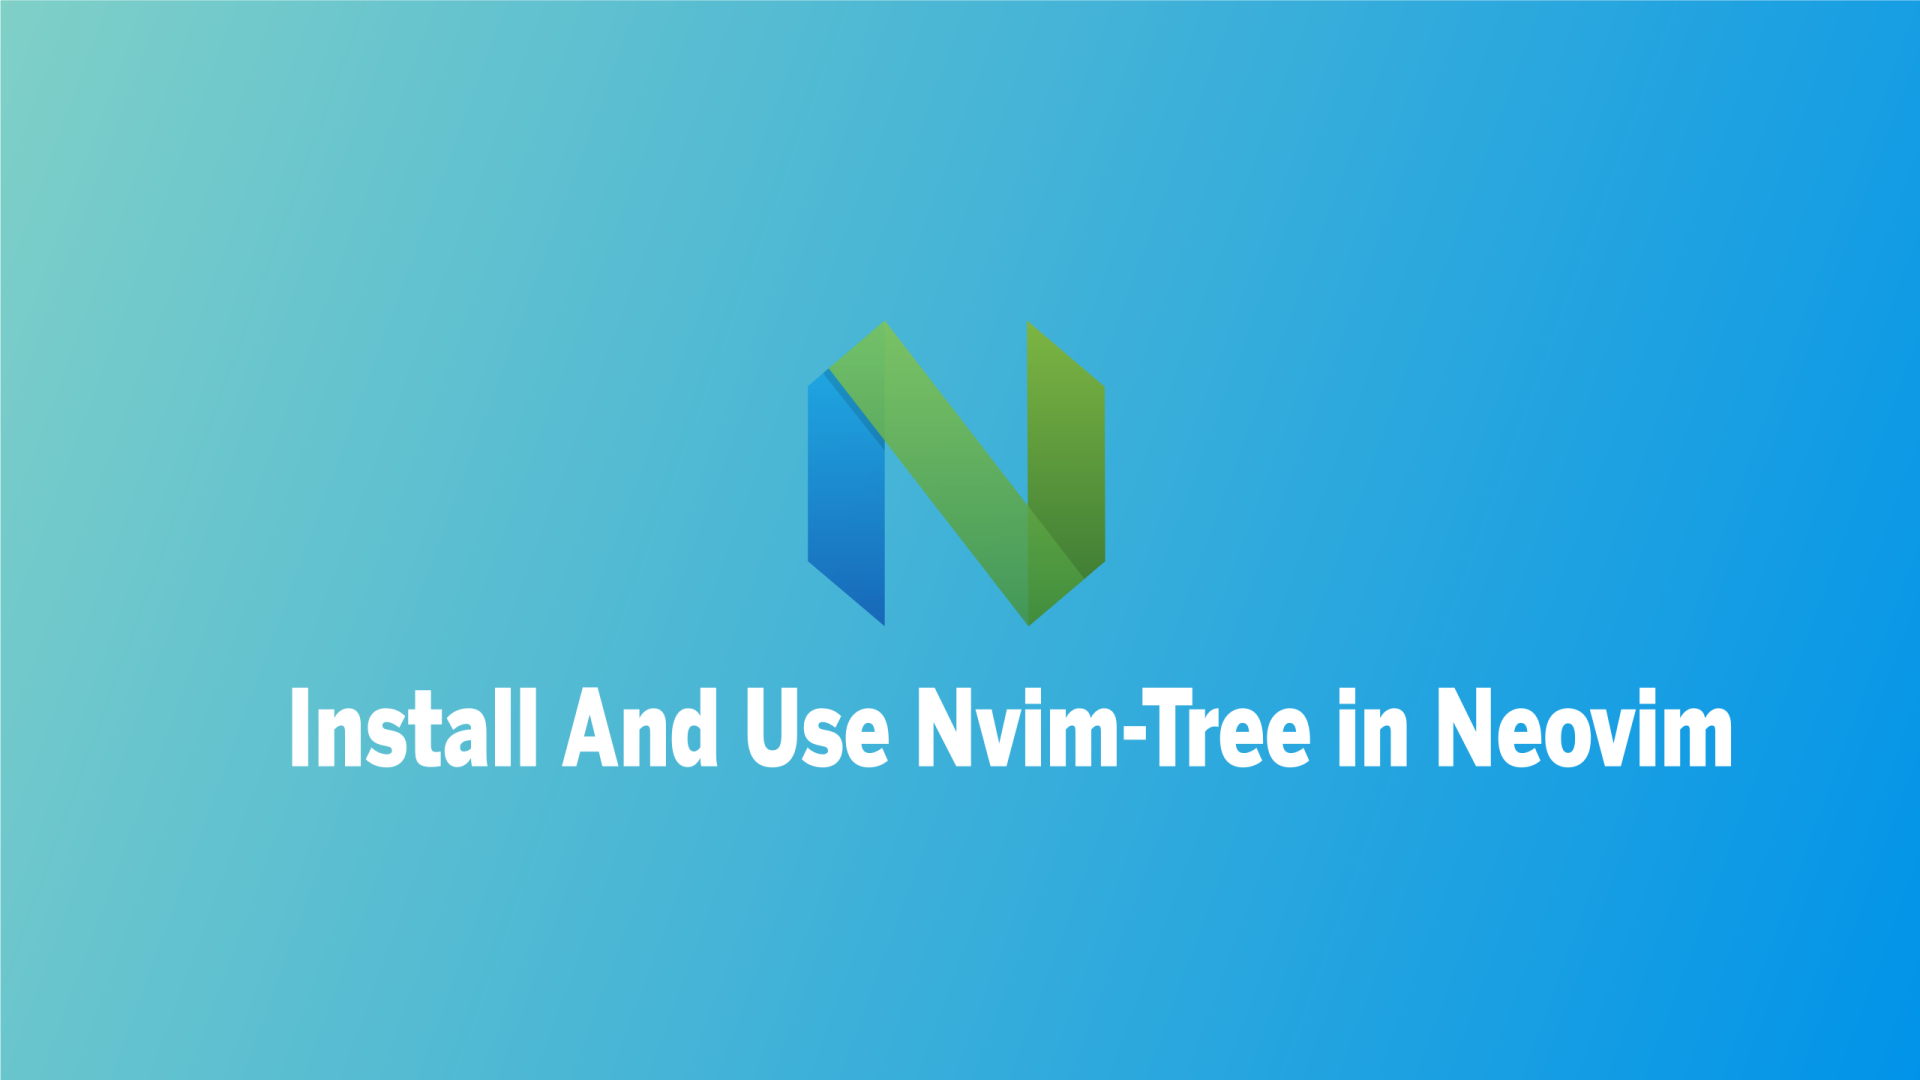 Install And Use Nvim-Tree in Neovim